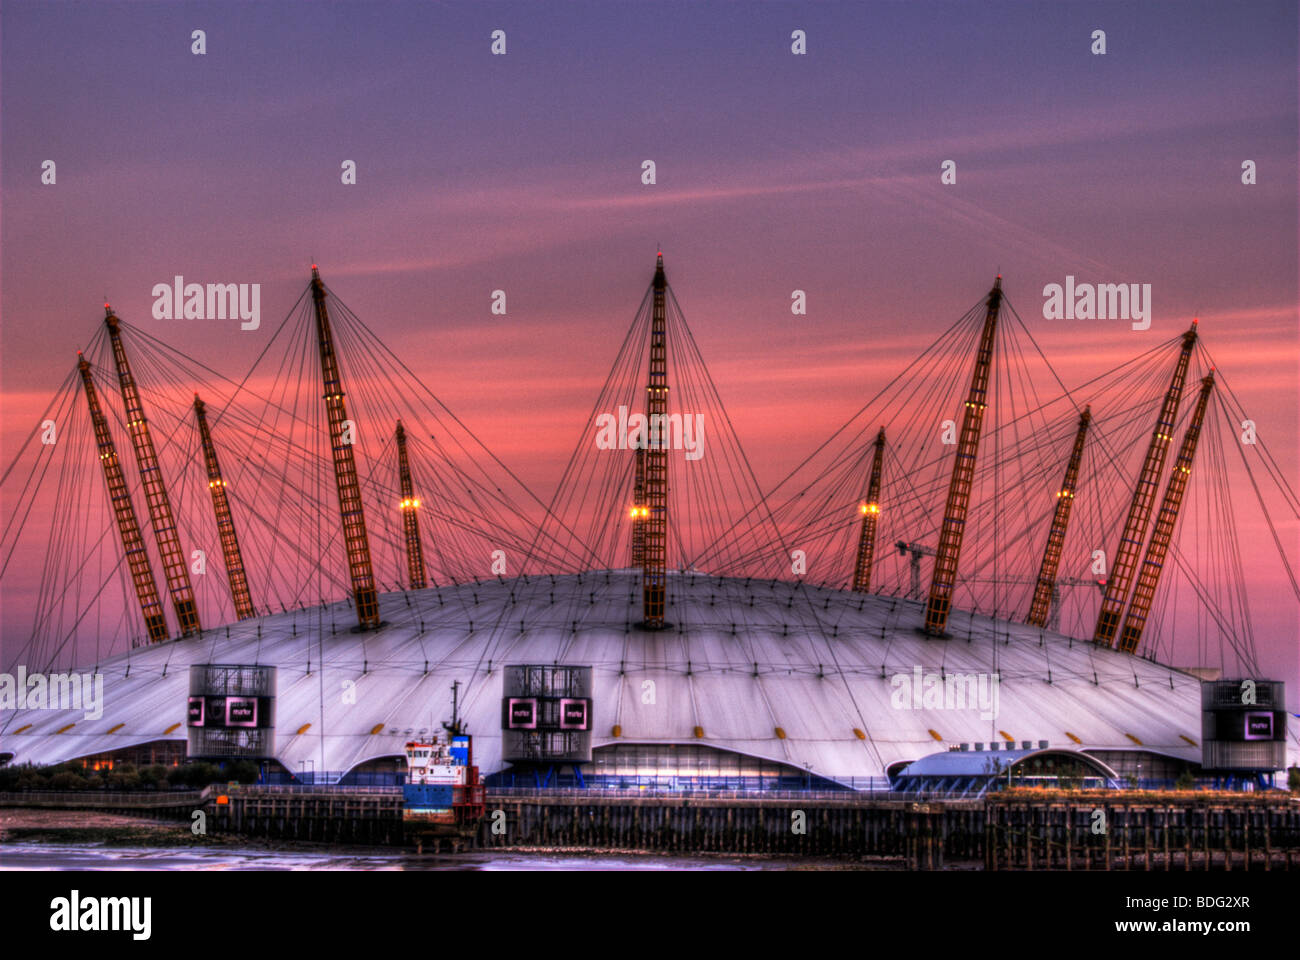 HDR - High Dynamic Range image of the O2 arena, Docklands, London, England, UK Stock Photo